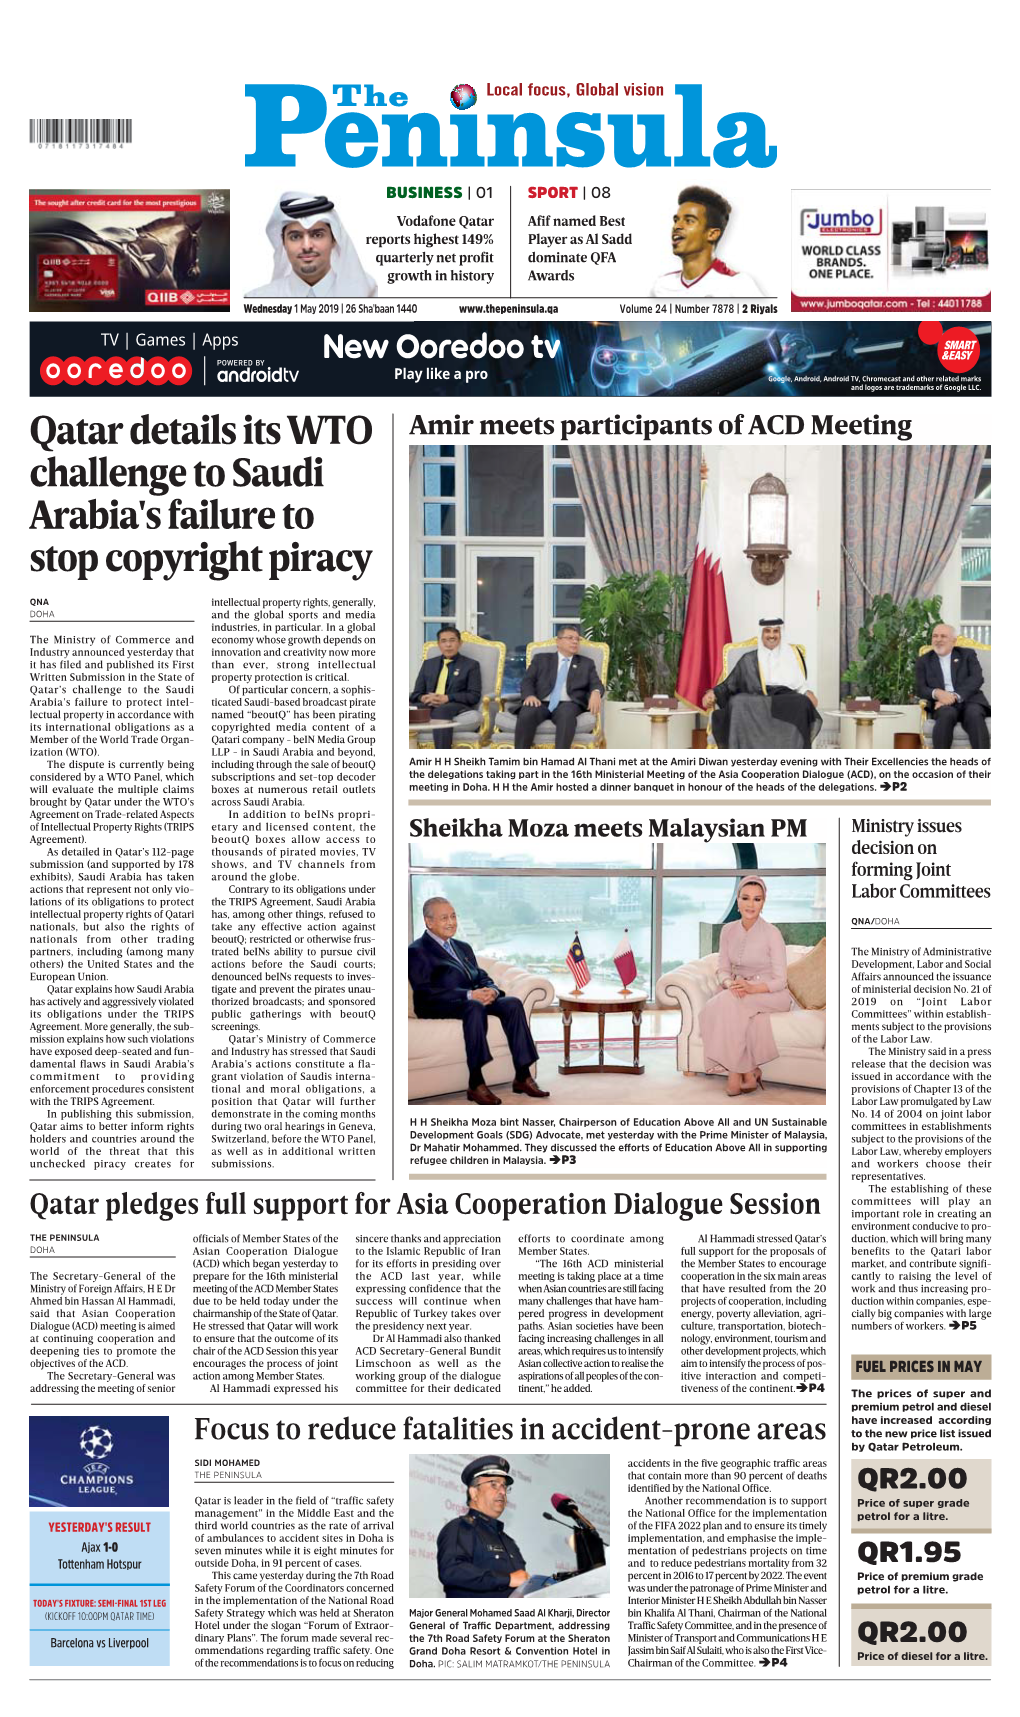 Qatar Details Its WTO Challenge to Saudi Arabia's Failure to Stop